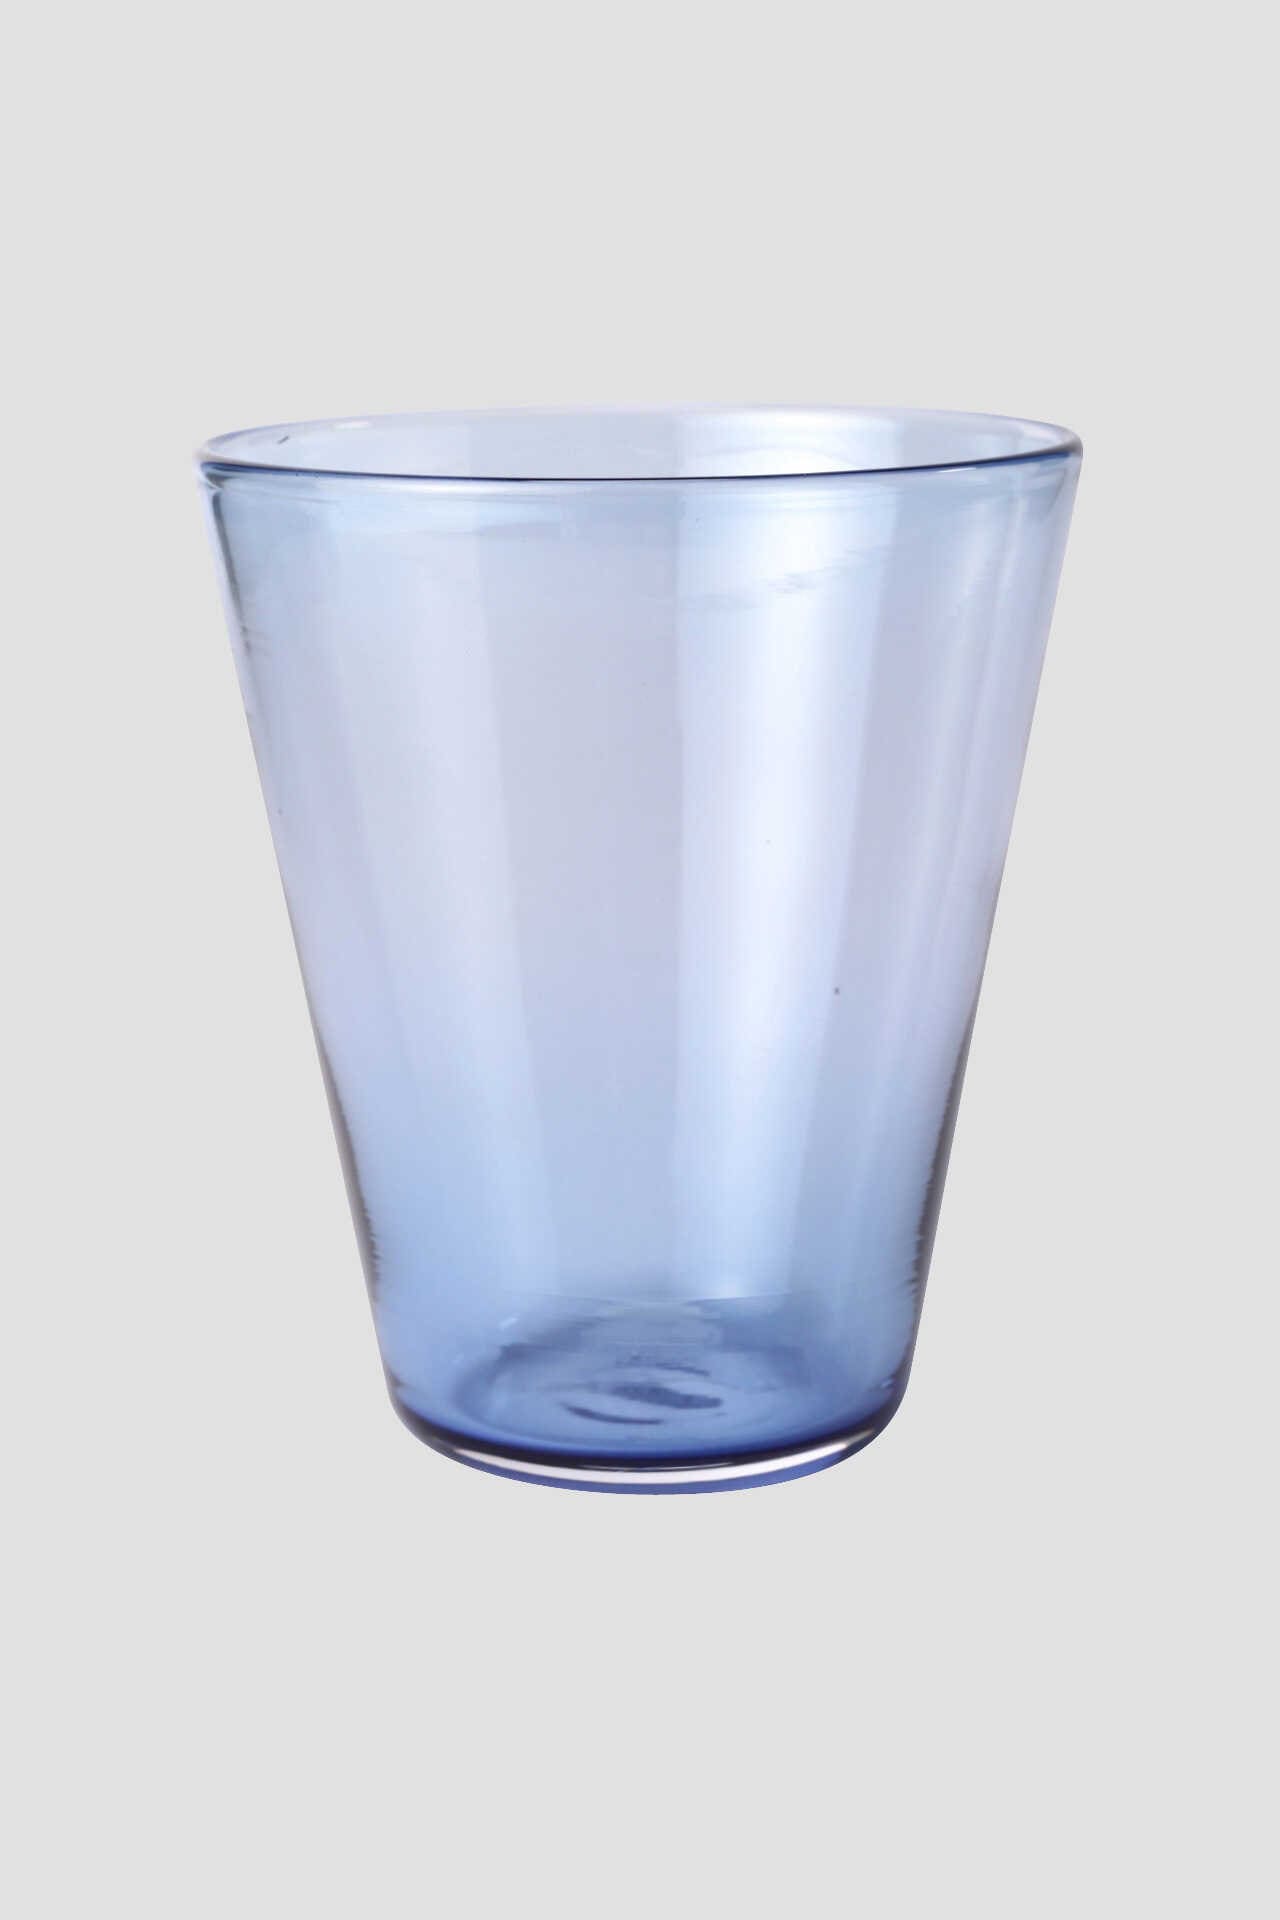 BLOWN GLASS WATER TUMBLER4